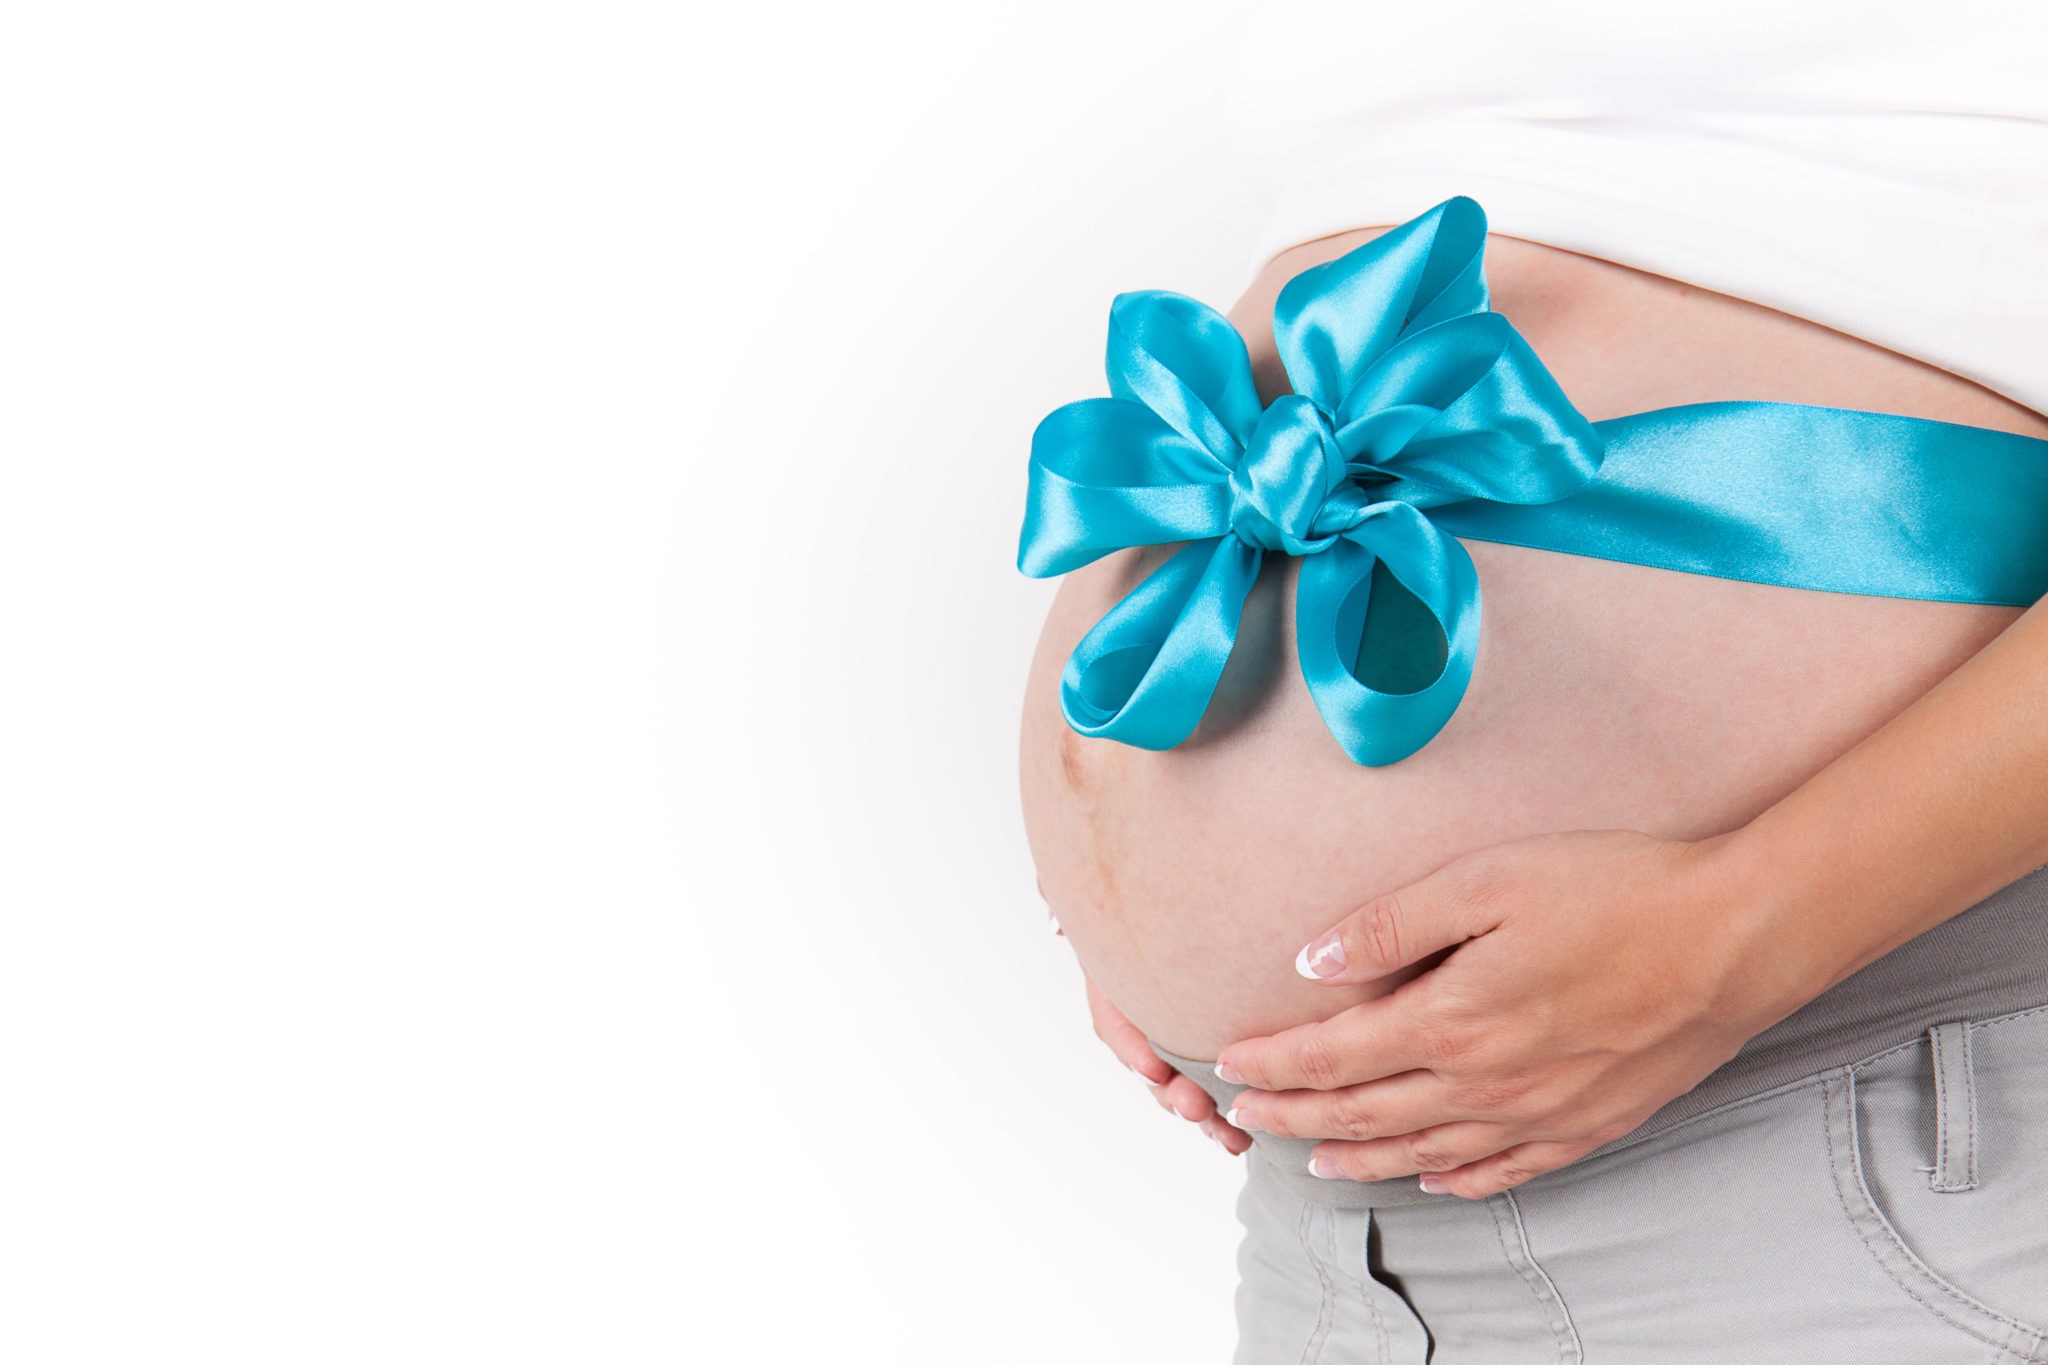 Gestational Surrogacy